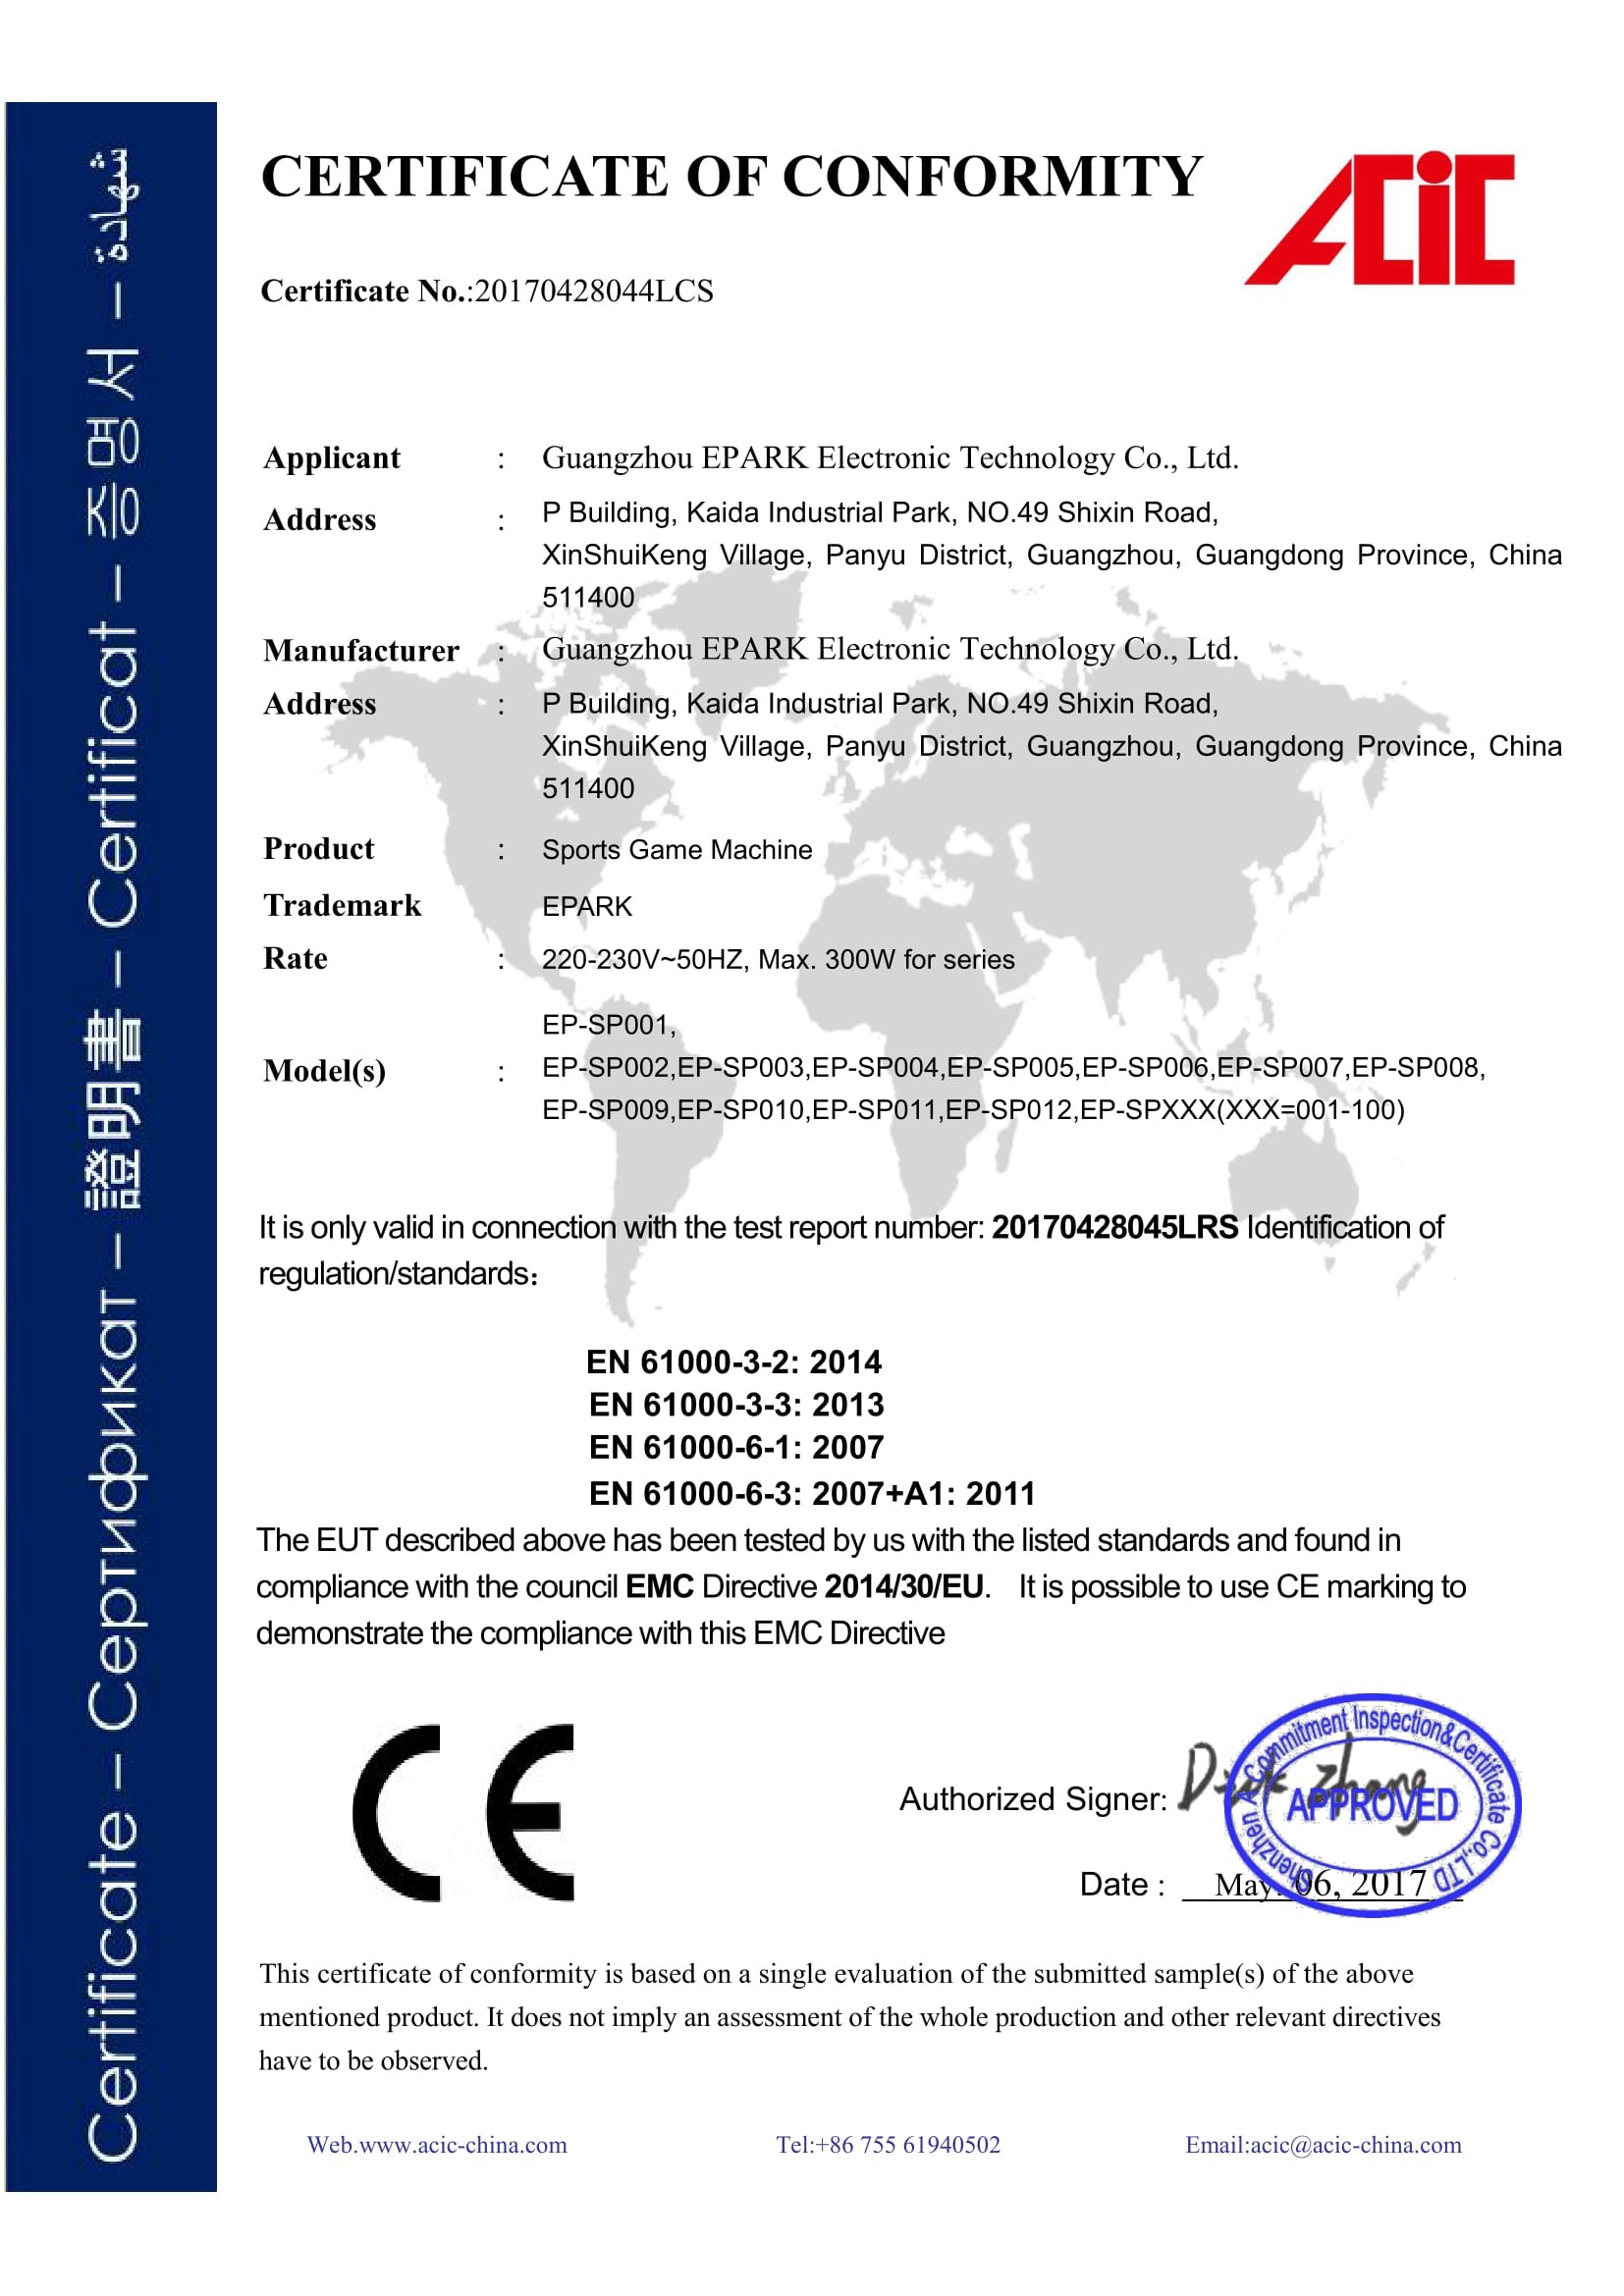 Guangzhou EPARK Electronic Technology Co., Ltd. Certifications